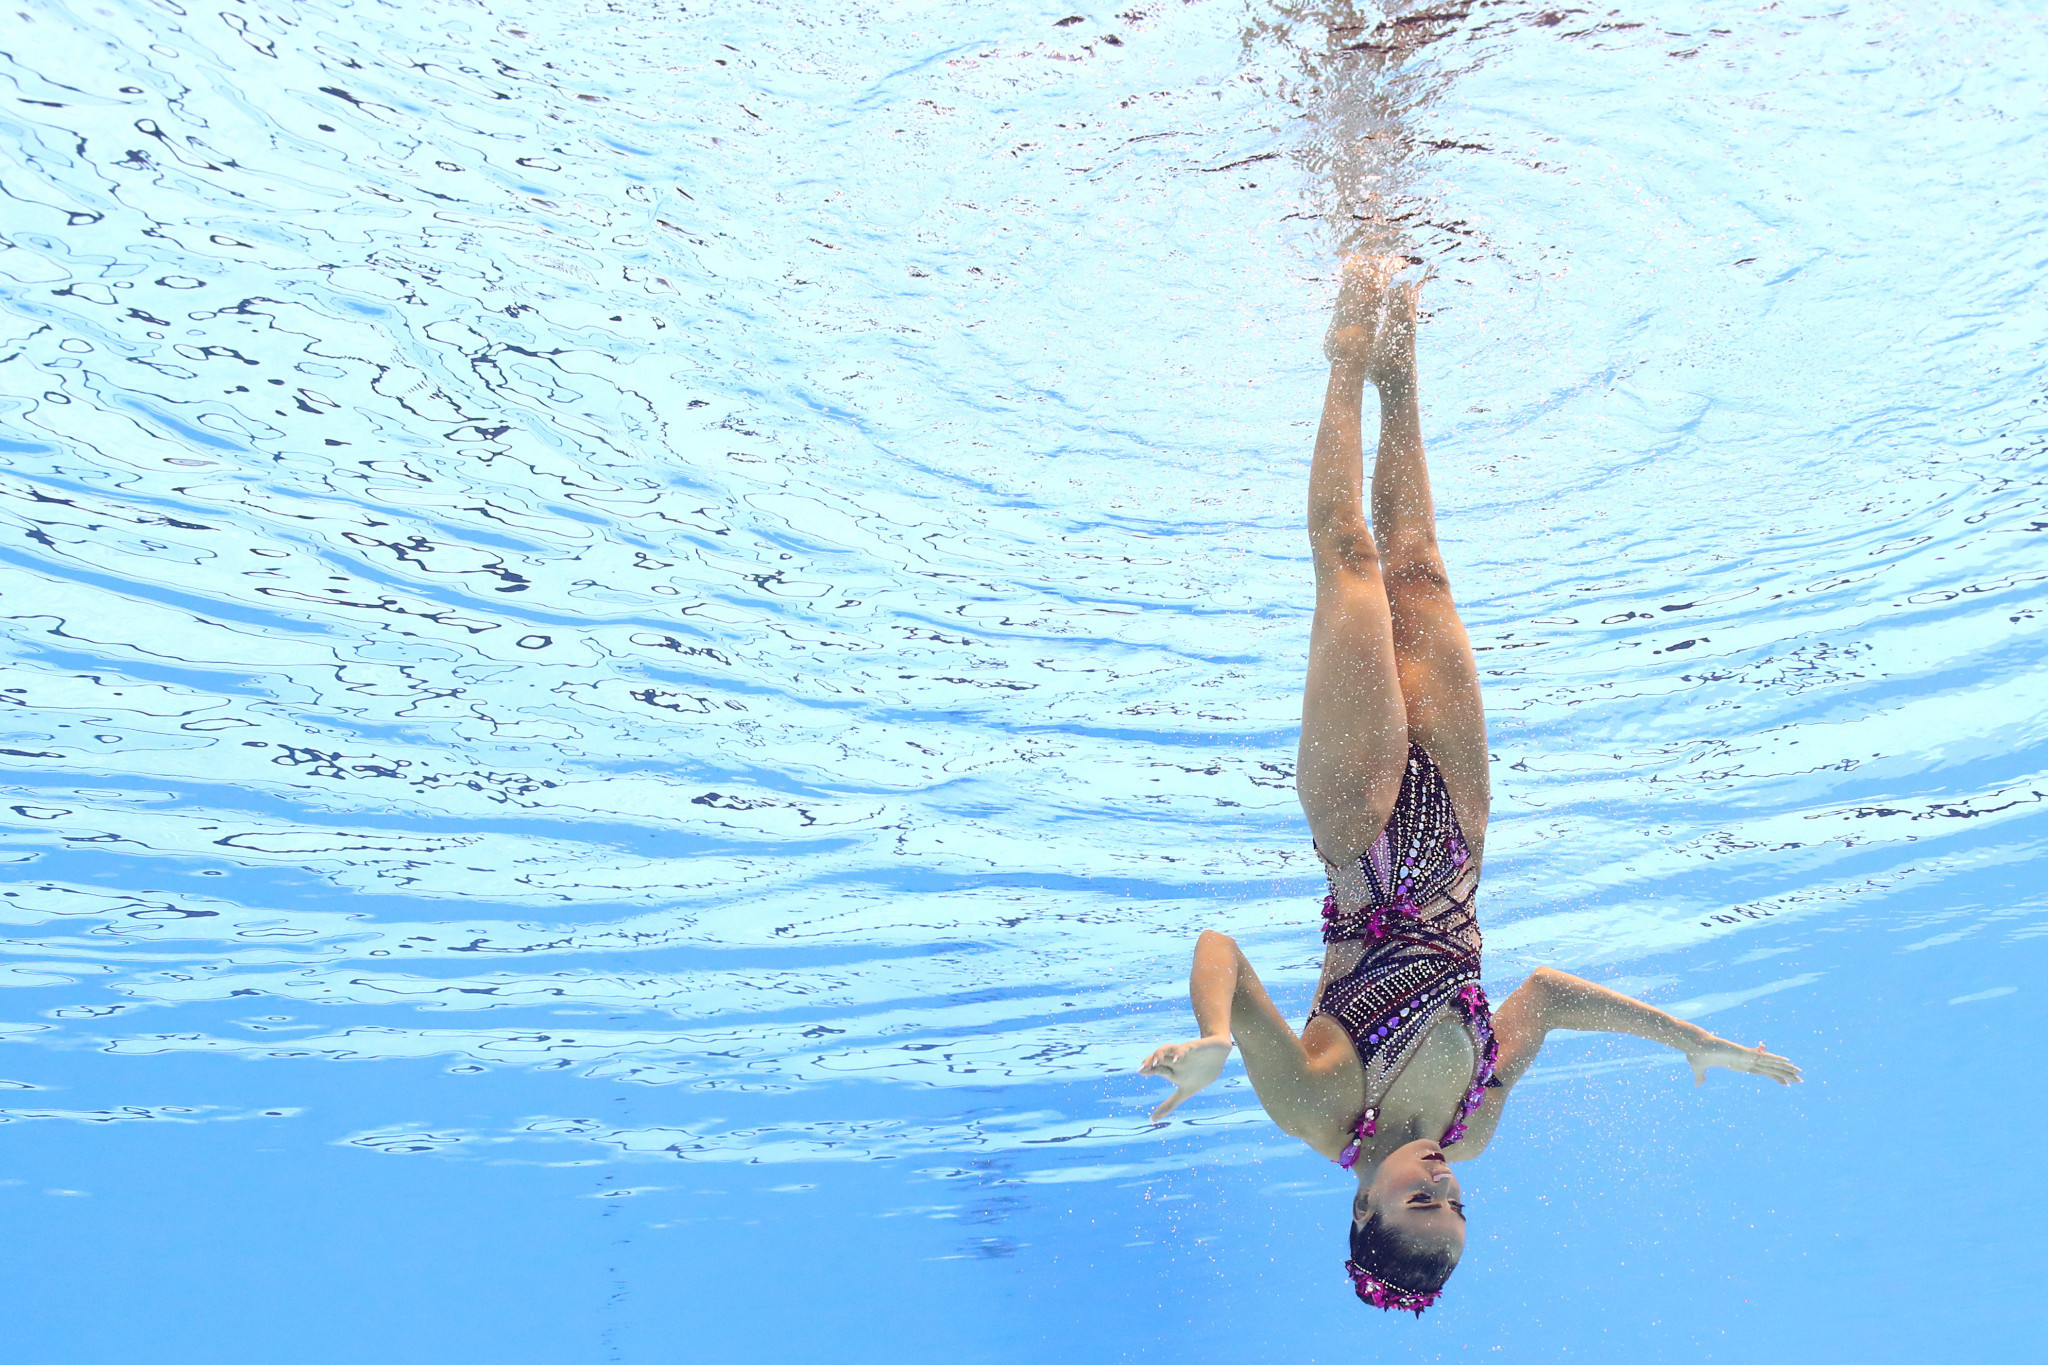 Alexandri leads Austria to gold at FINA Artistic Swimming World Series Super Final